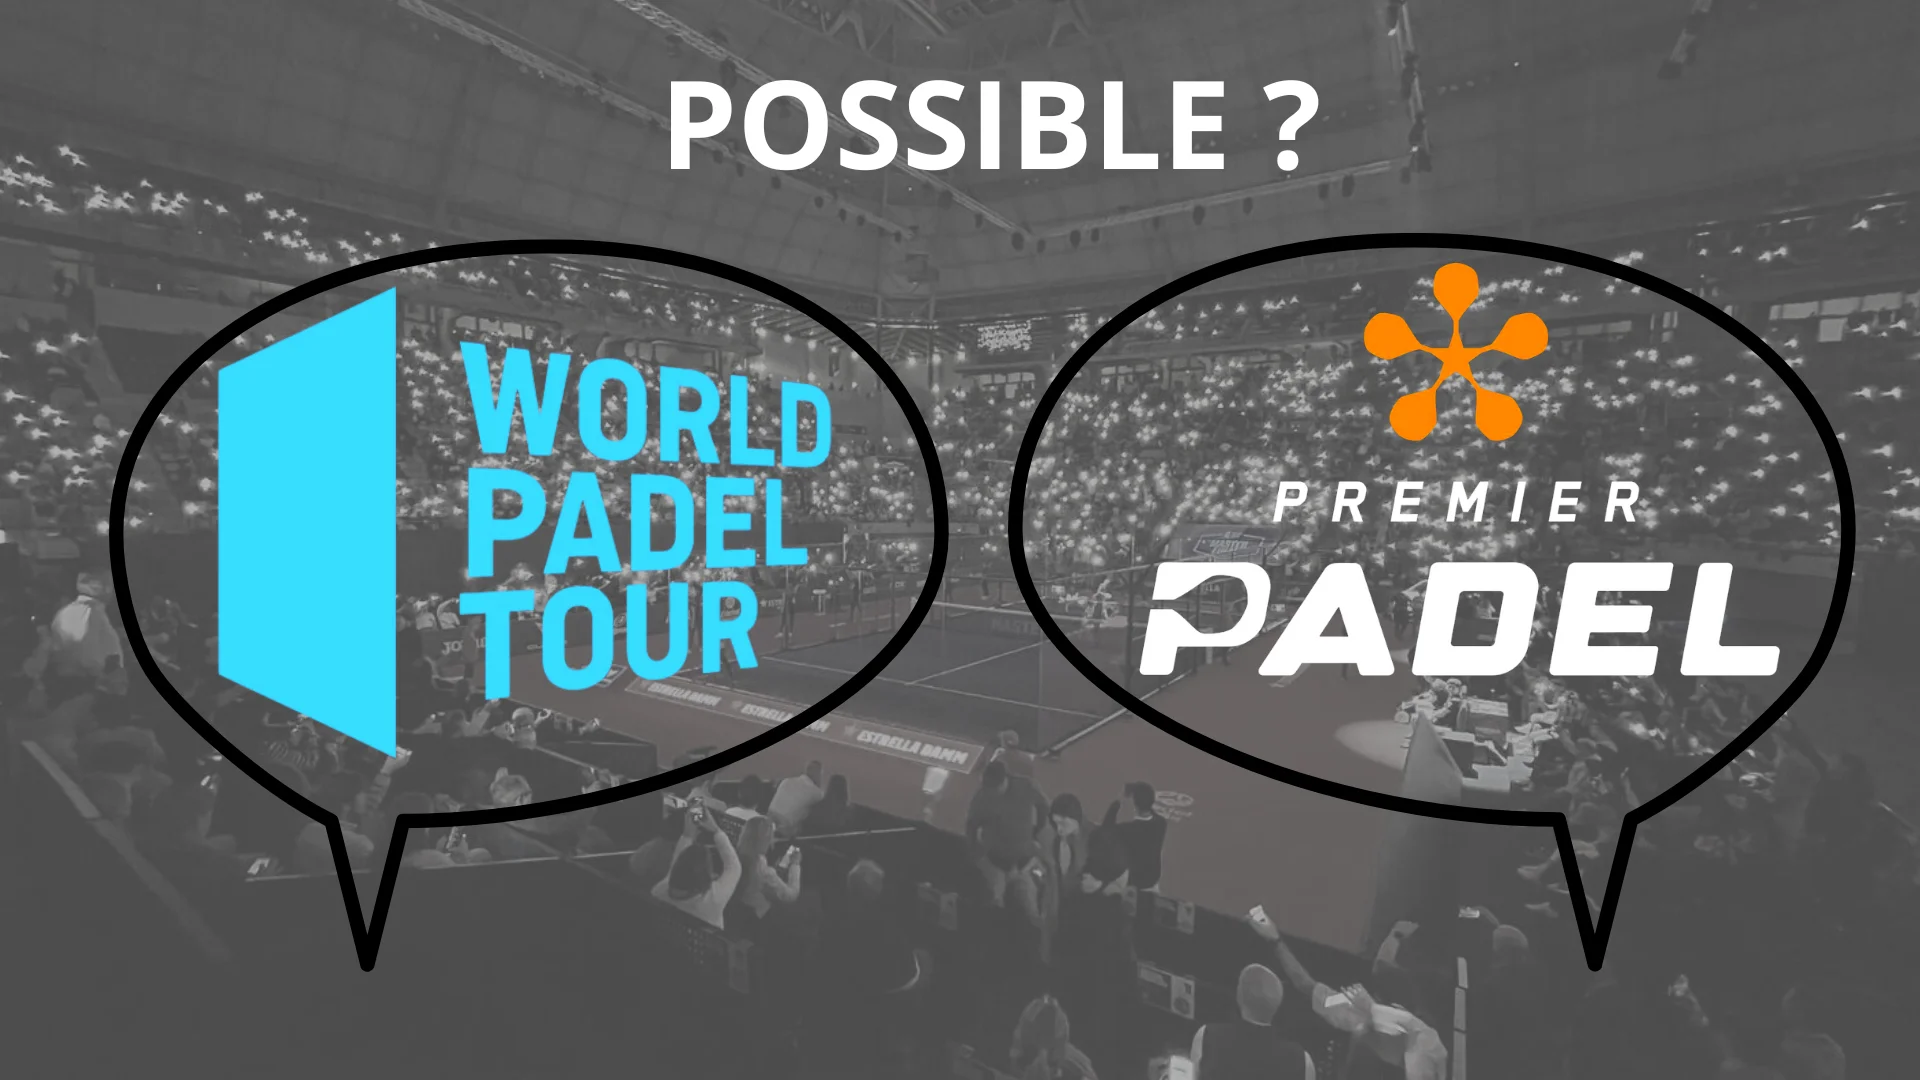 Le World Padel Tour formalisiert seine Diskussion mit QSI